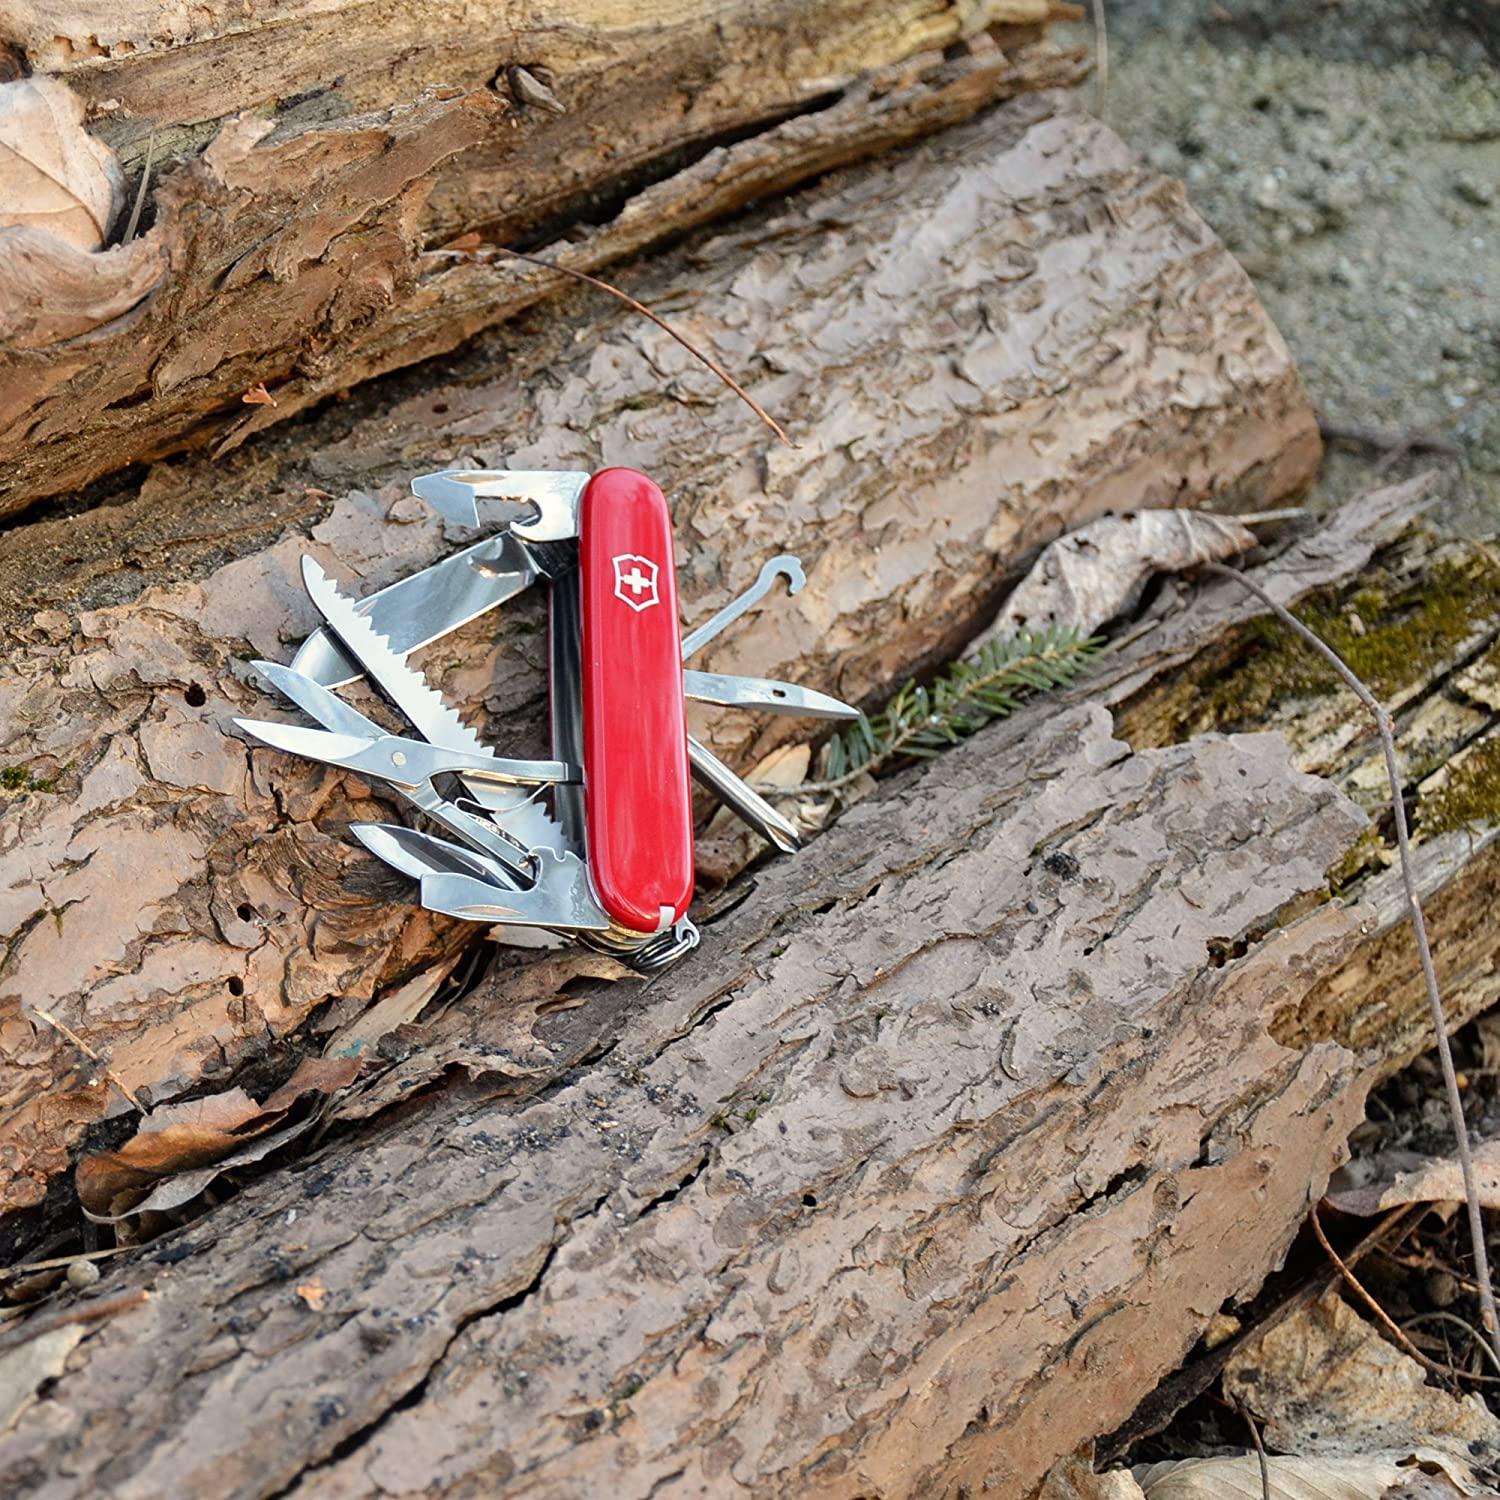  Victorinox Swiss Army Multi-Tool, Tinker Pocket Knife , Red,  91mm : Tools & Home Improvement